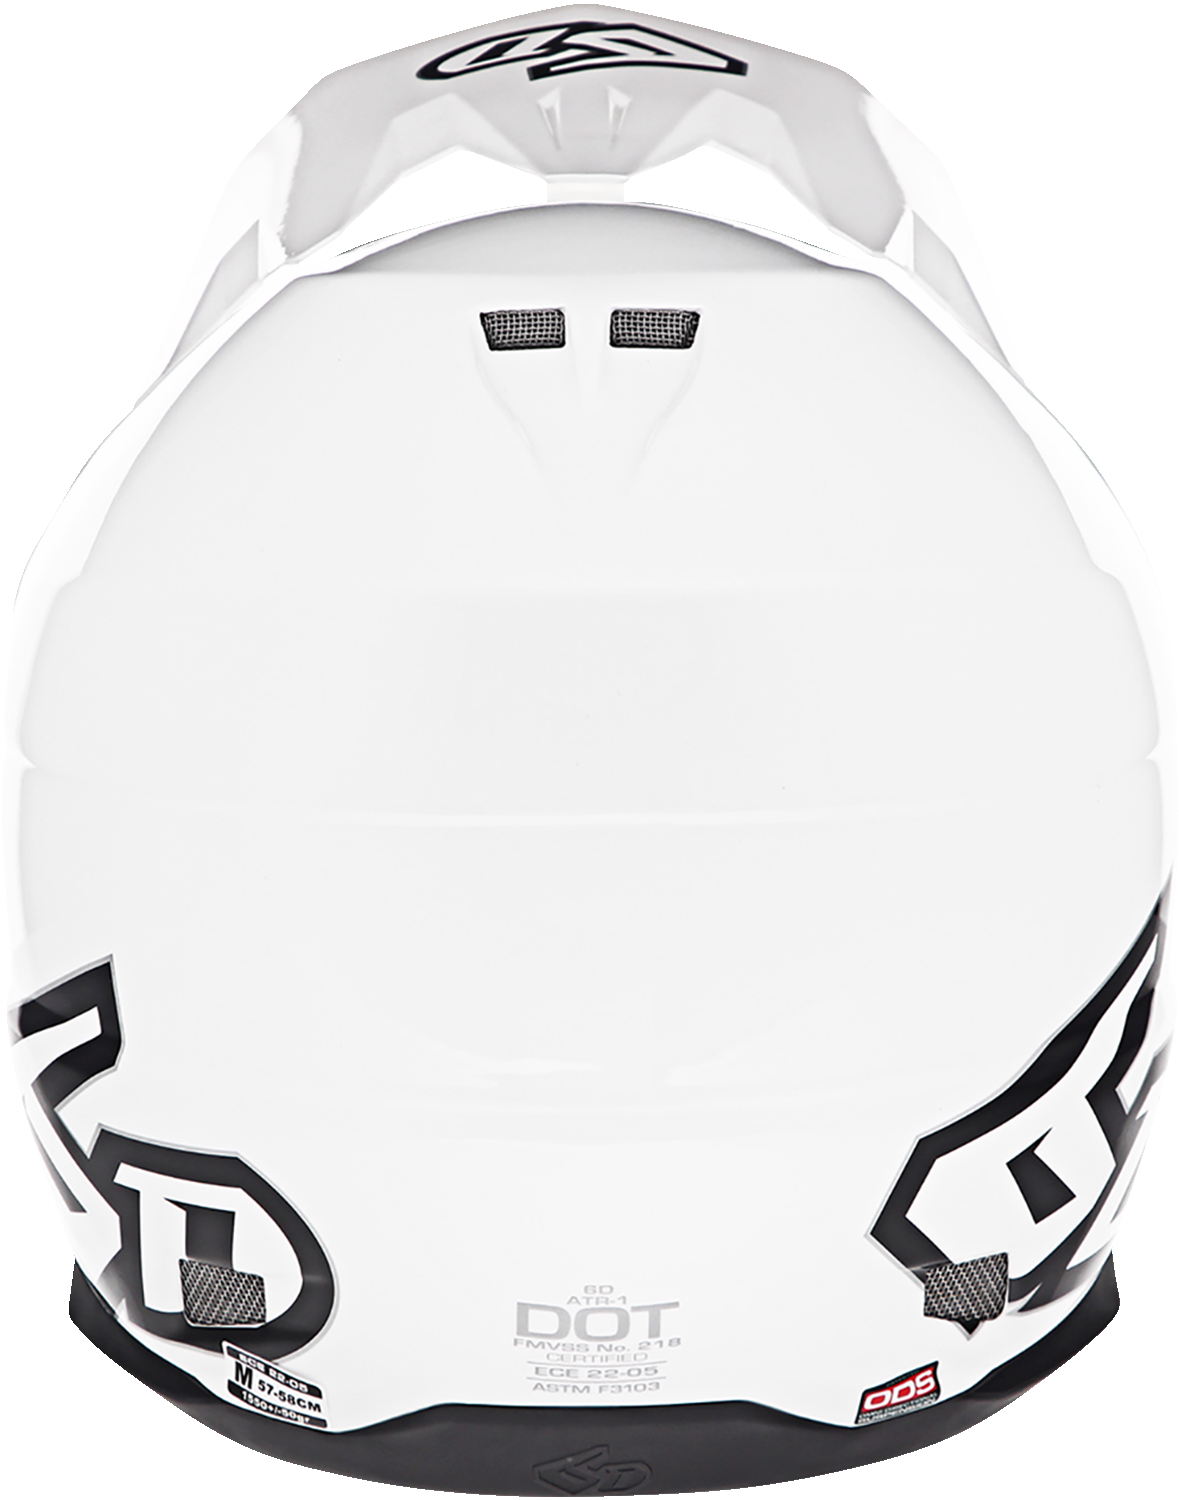 6D ATR-1 Helmet - White - Small 10-3725